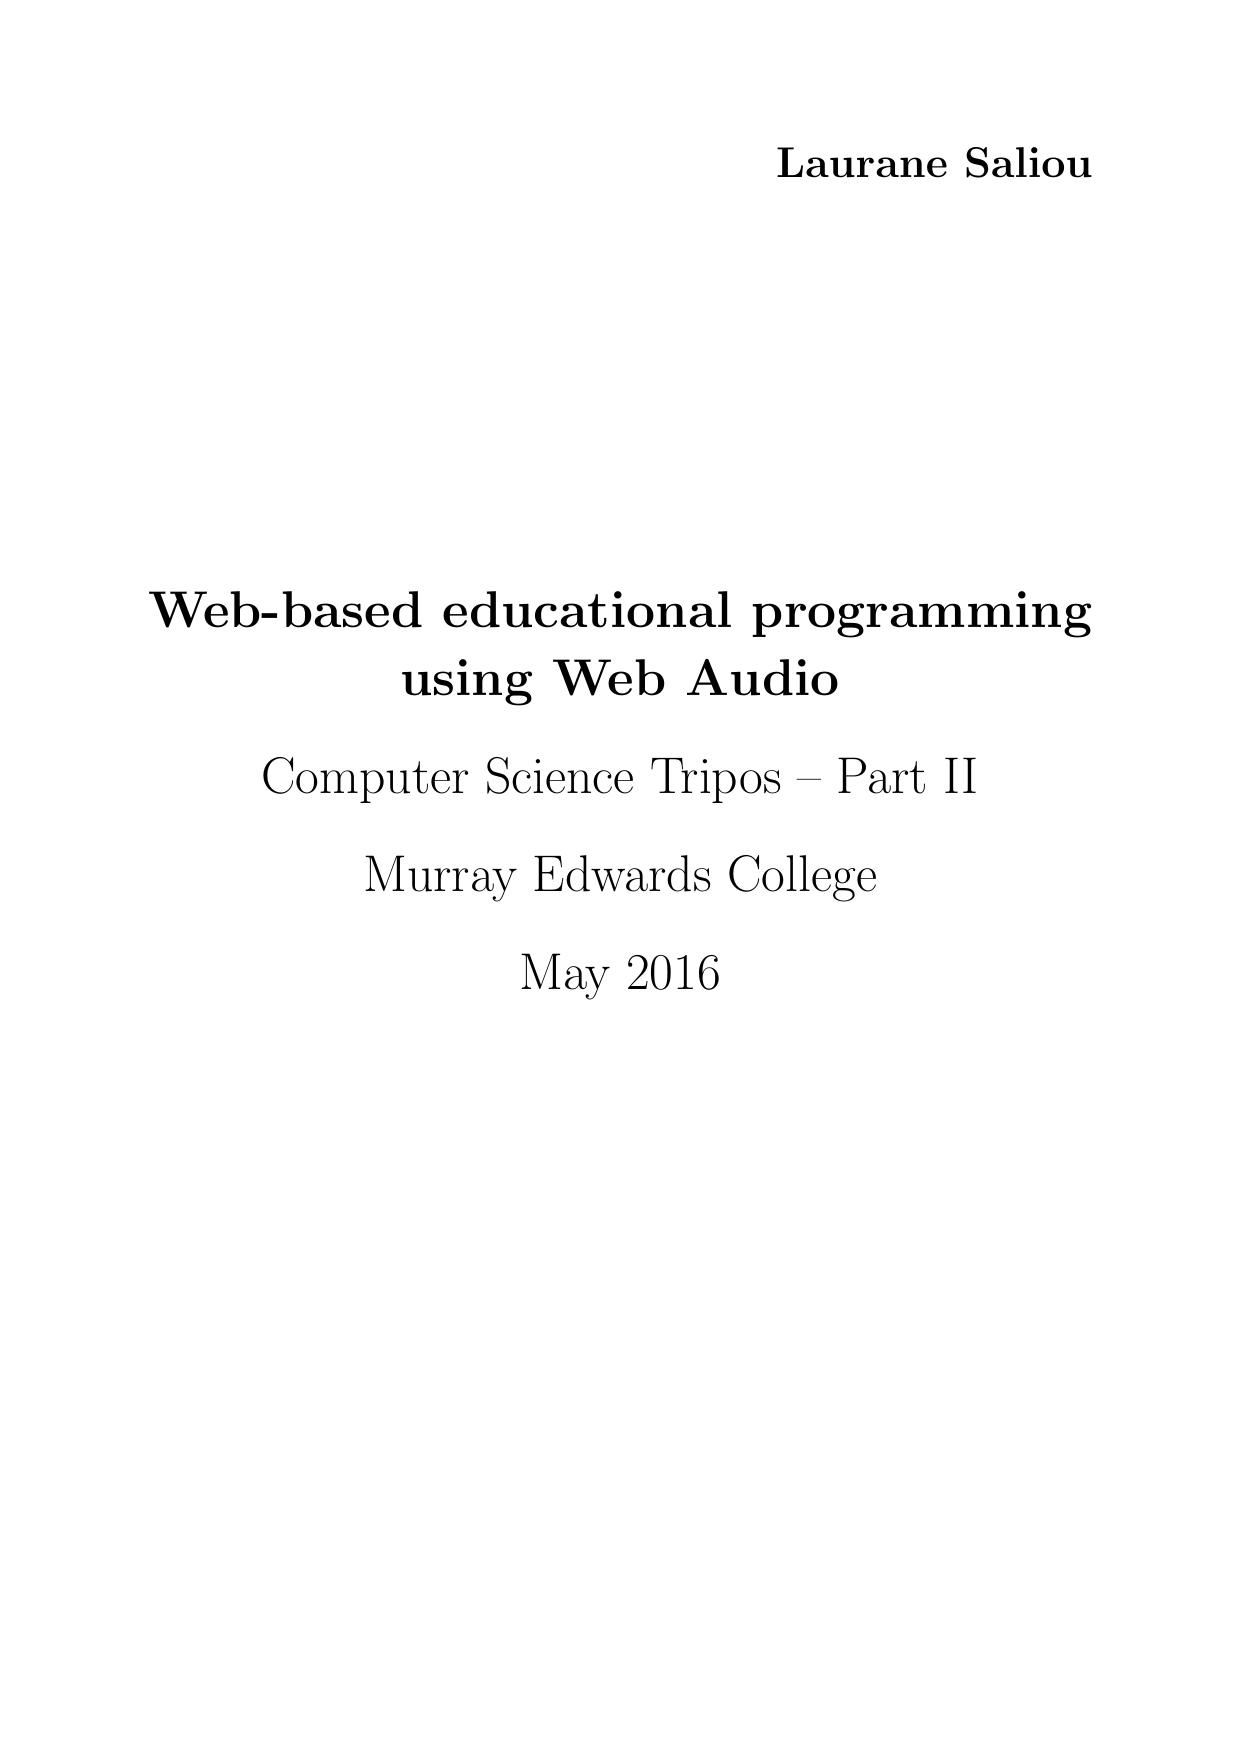 Web-Based Educational Programming Using Web Audio Computer Science Tripos PT II 2016